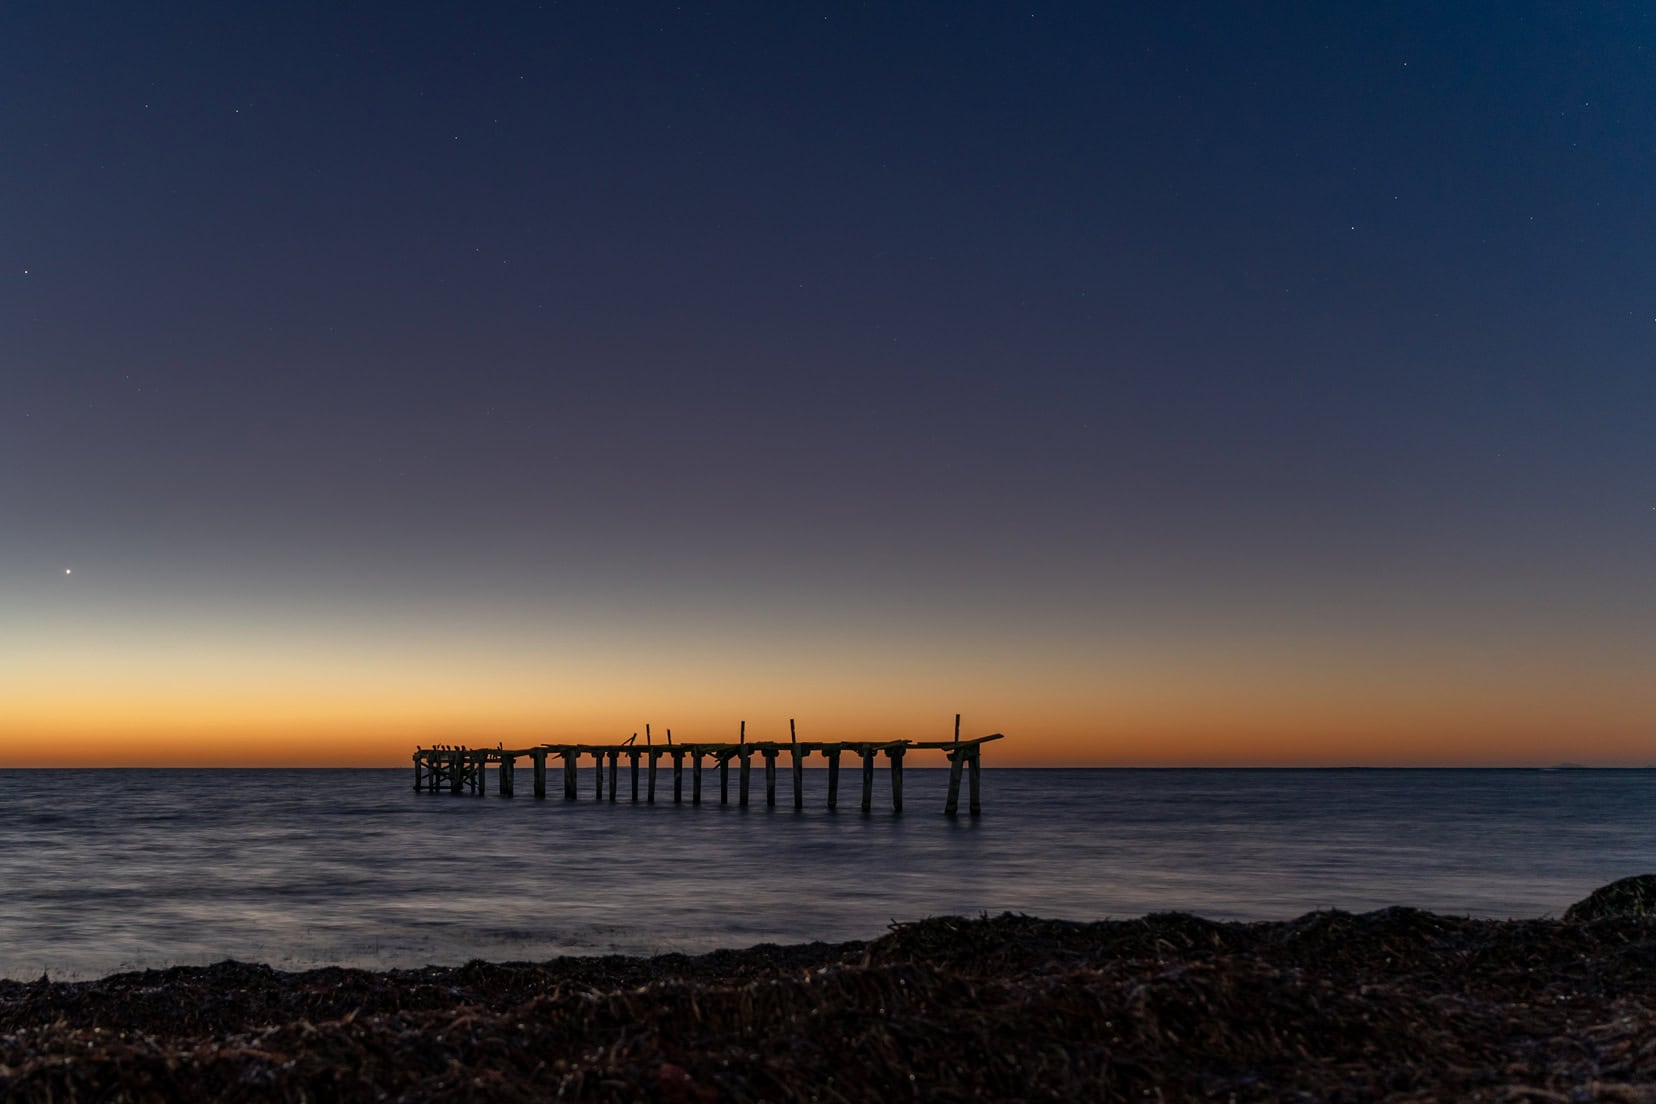 Israelite-Bay-jetty-sunrise with stars